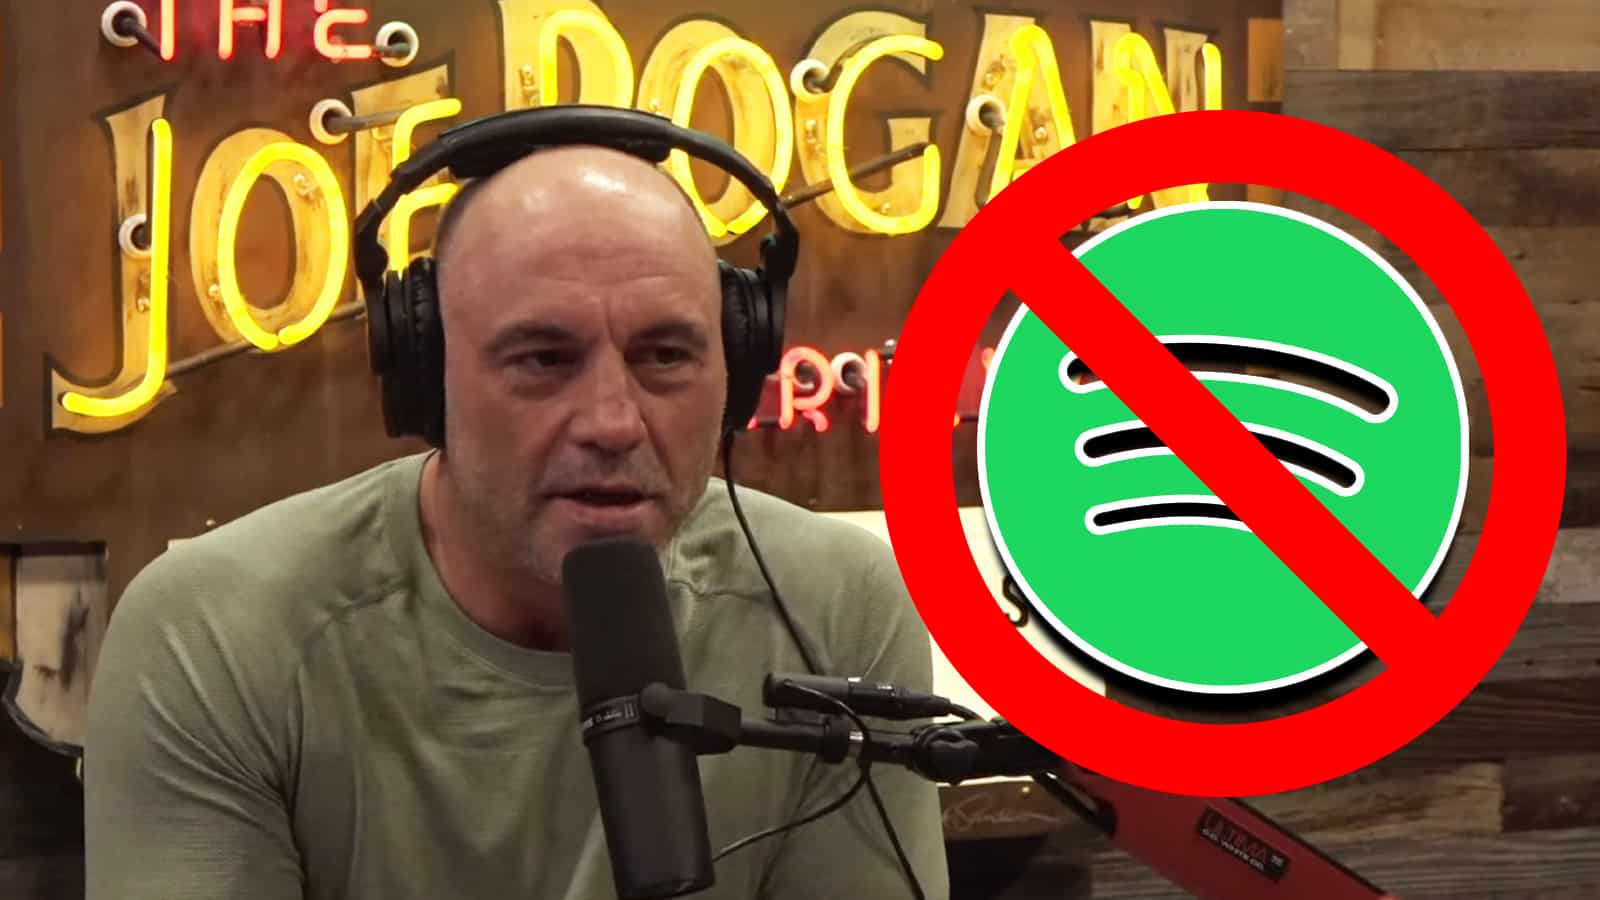 Joe Rogan hosting podcast next to Spotify logo.